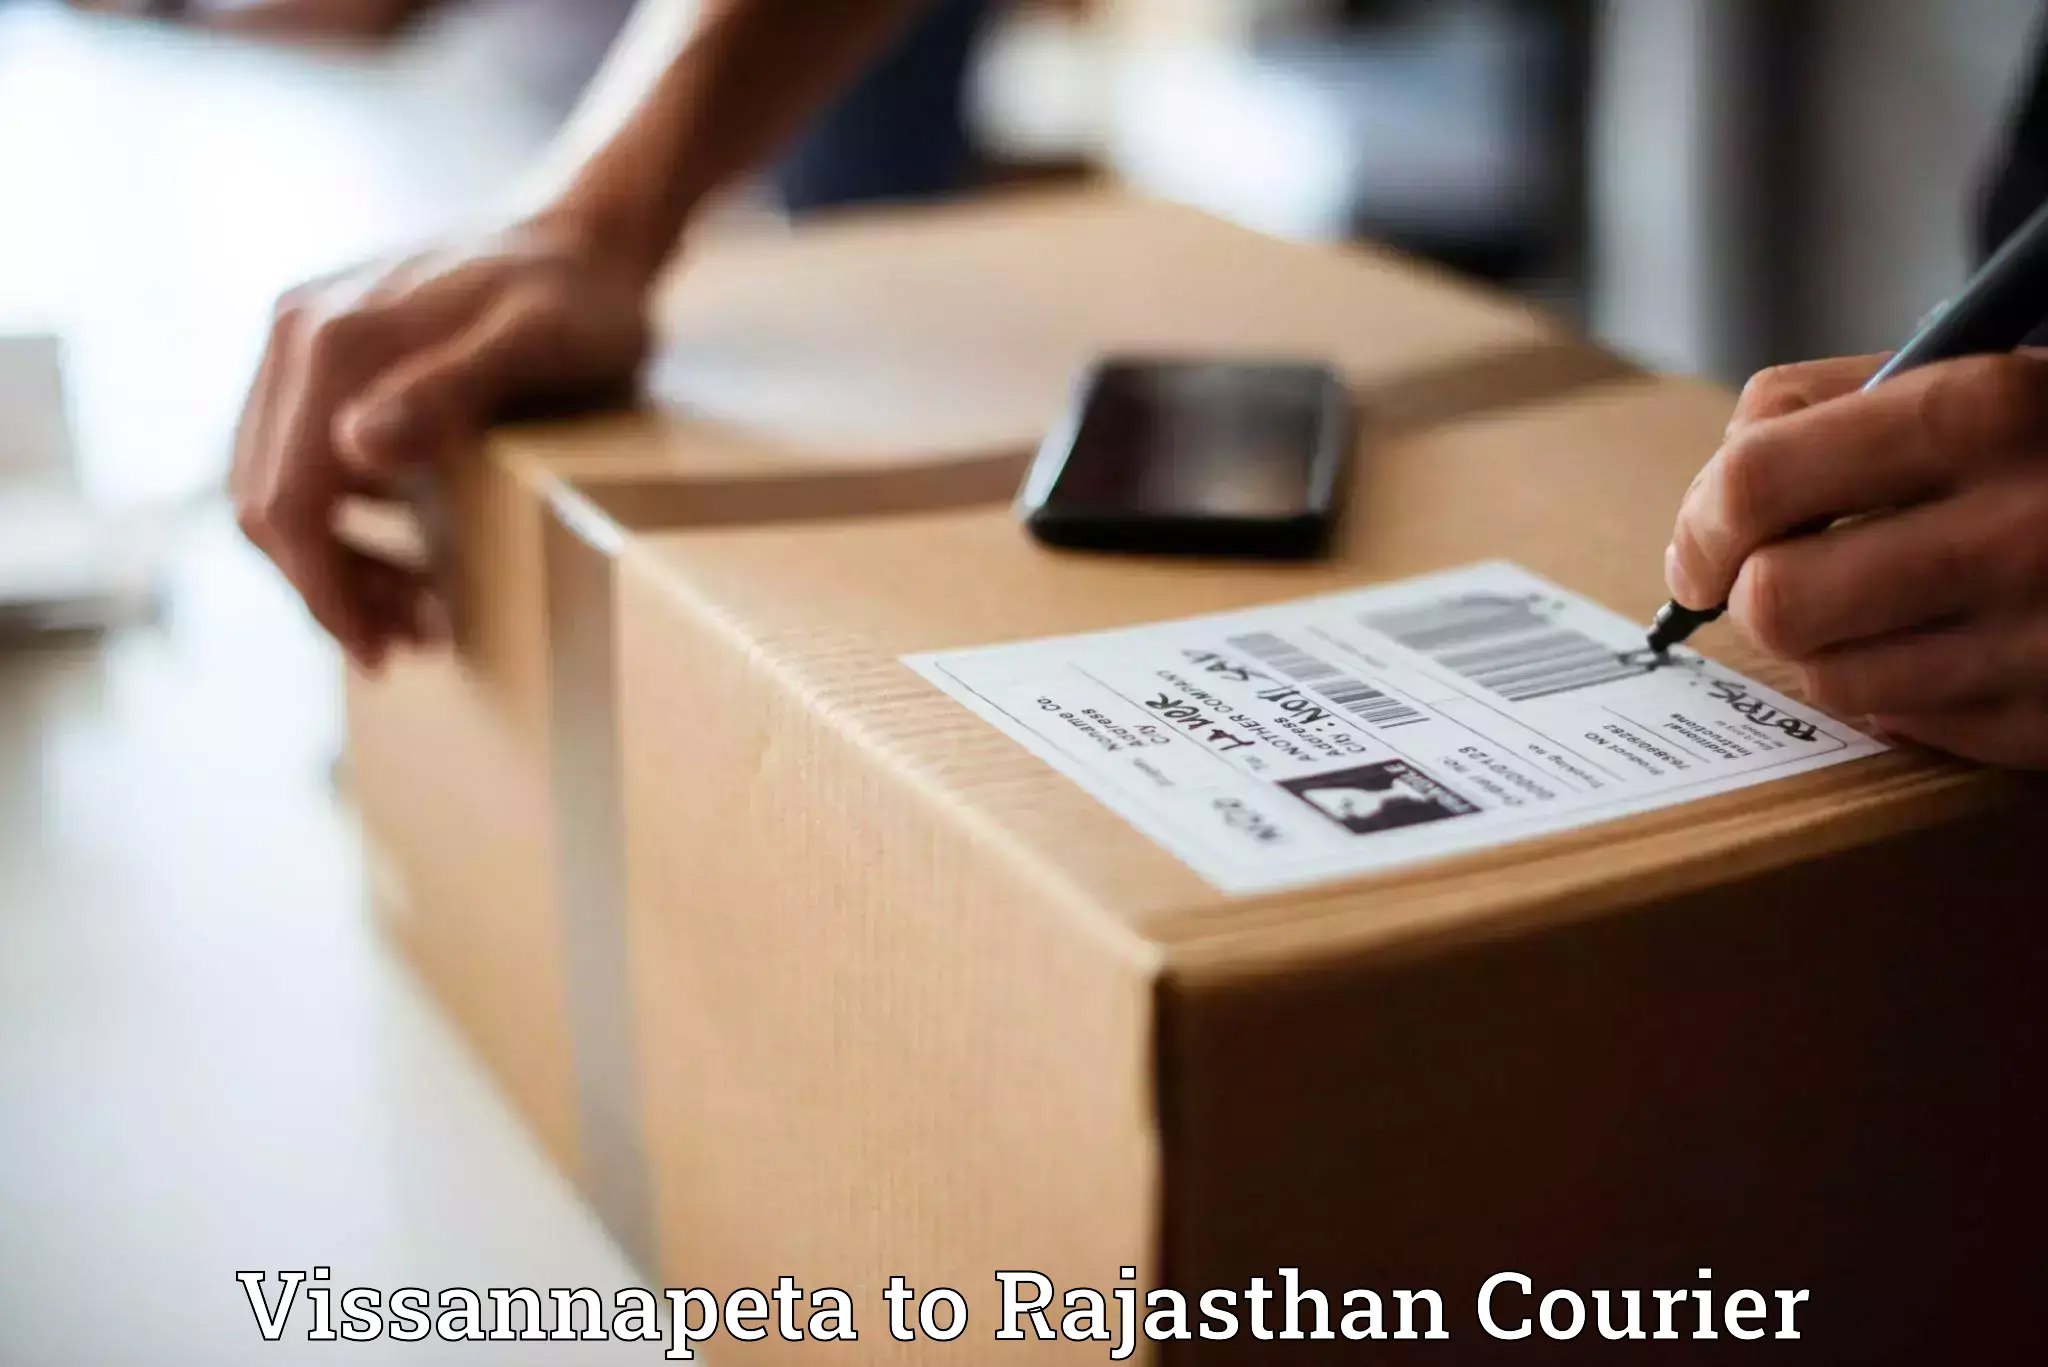 State-of-the-art courier technology in Vissannapeta to Gogunda